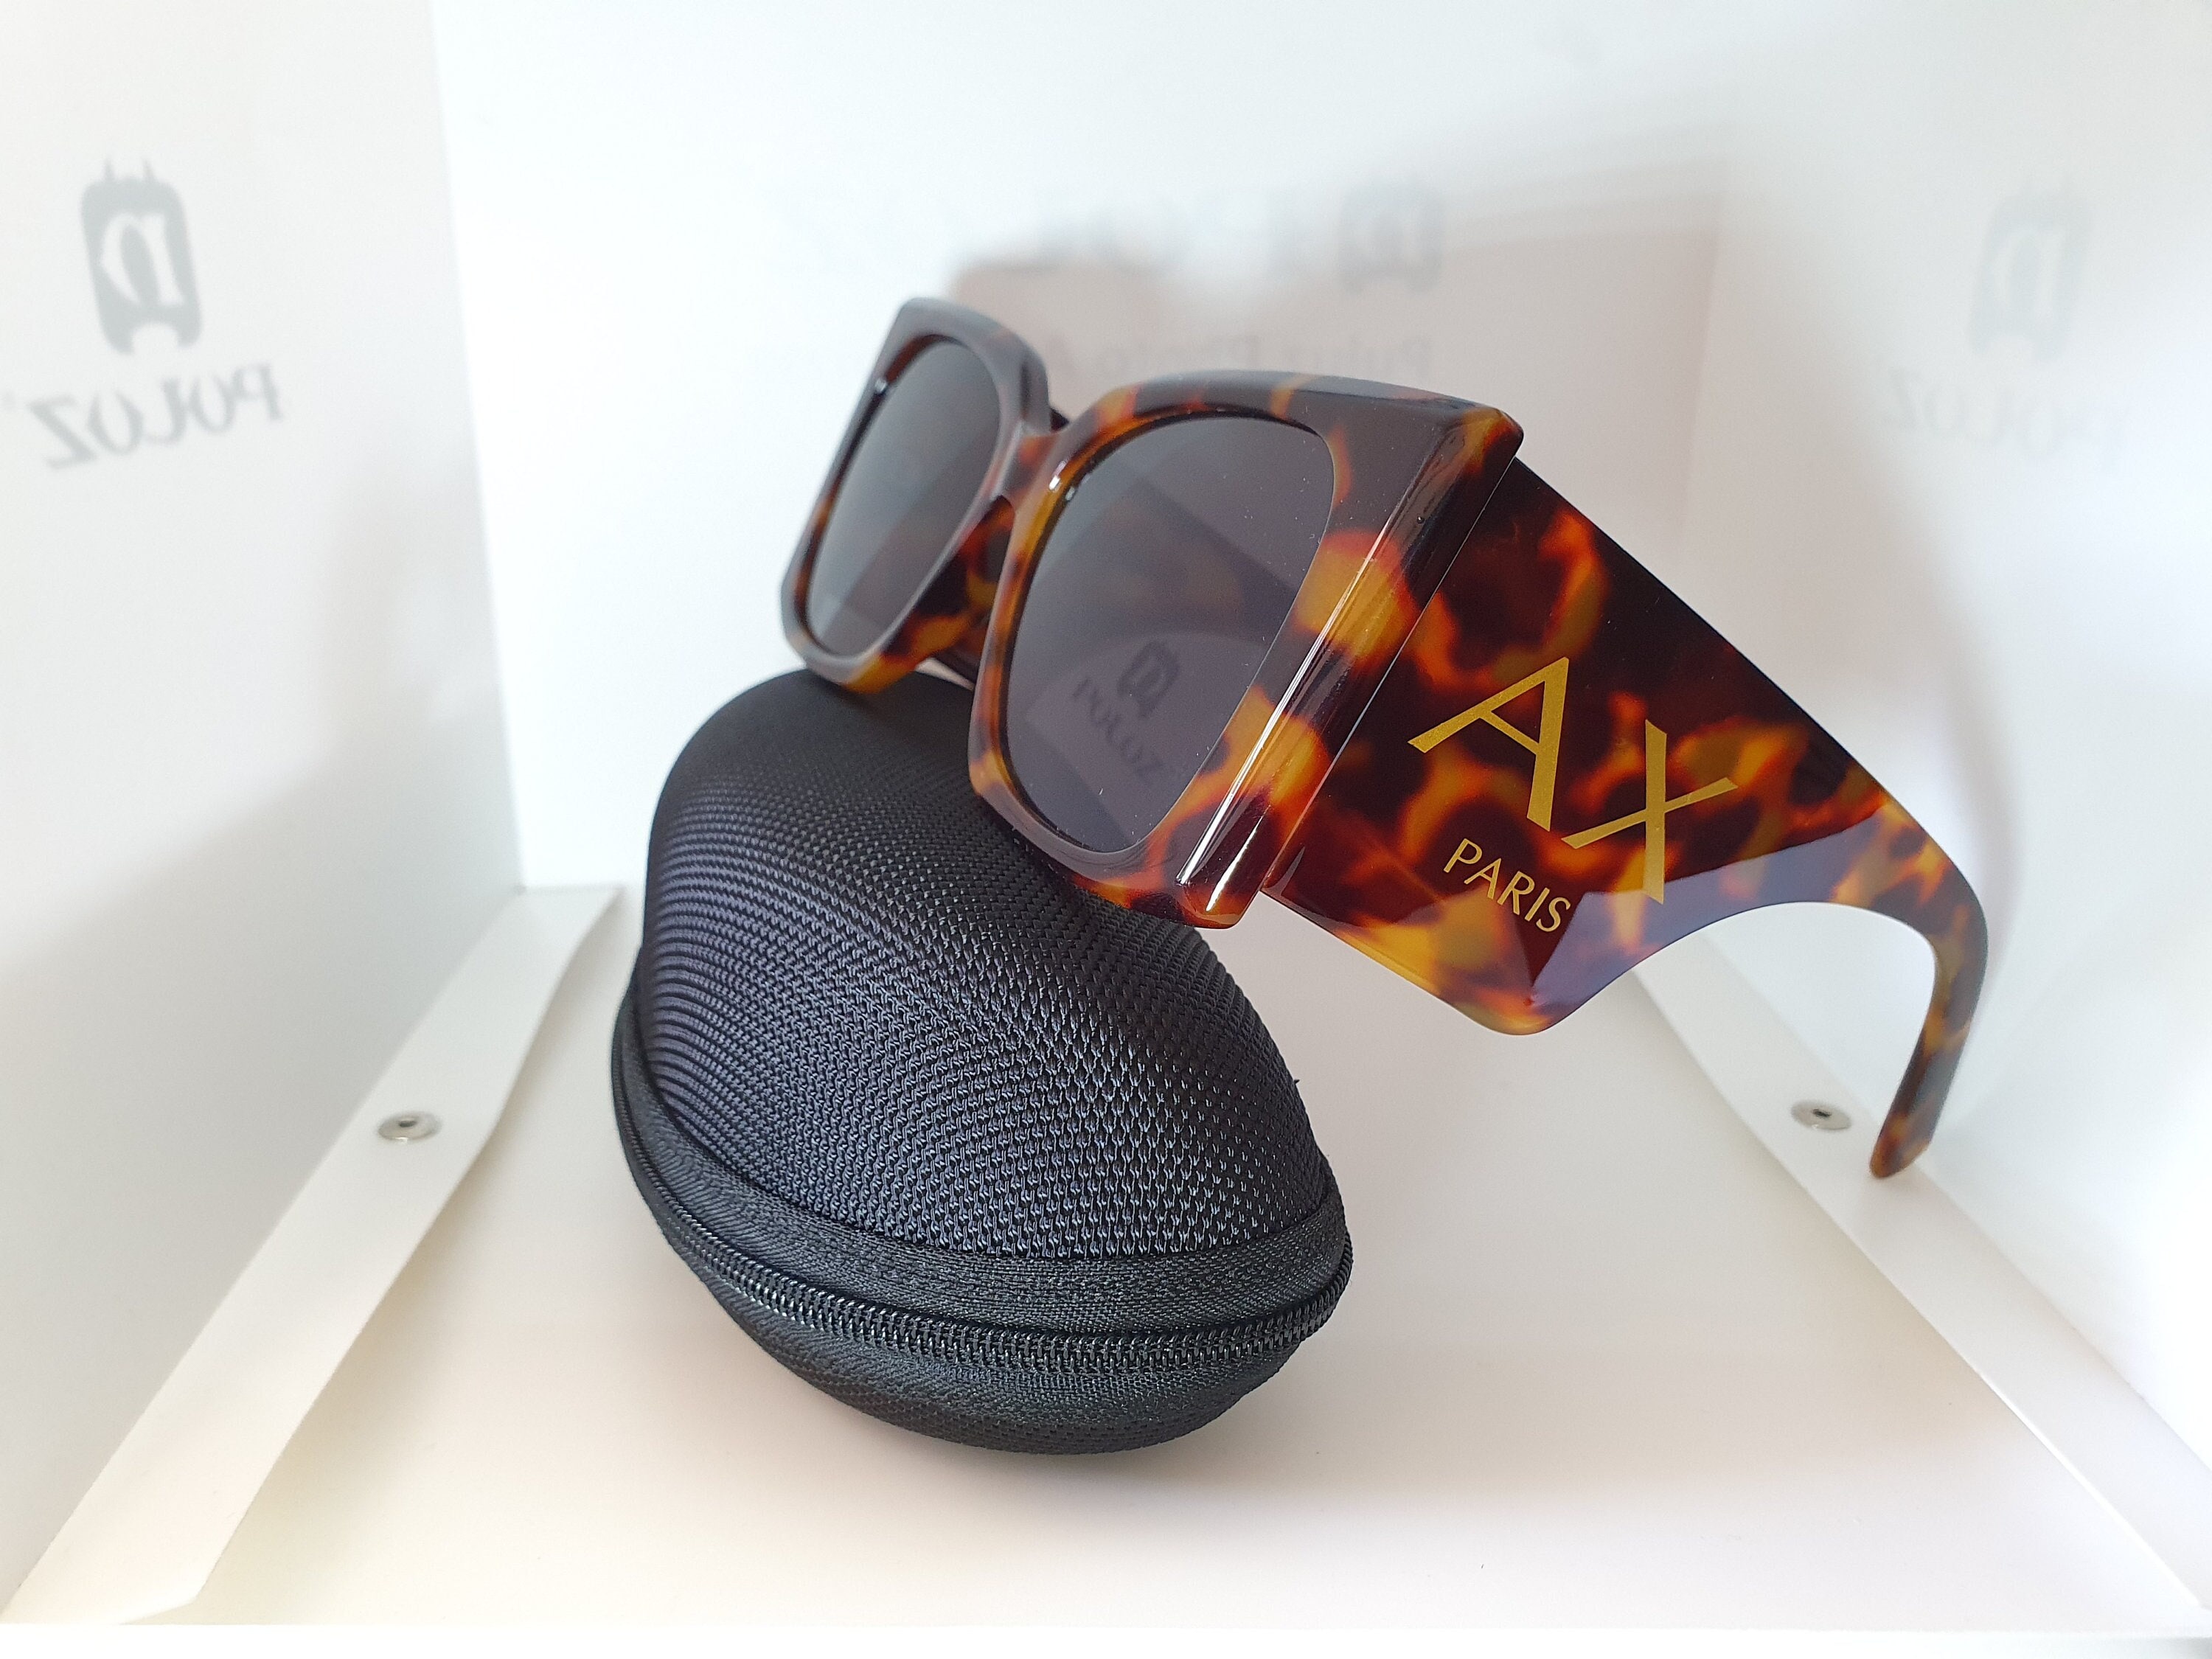 Designer Sunglasses for Women - Luxury Sunglasses - LOUIS VUITTON ®